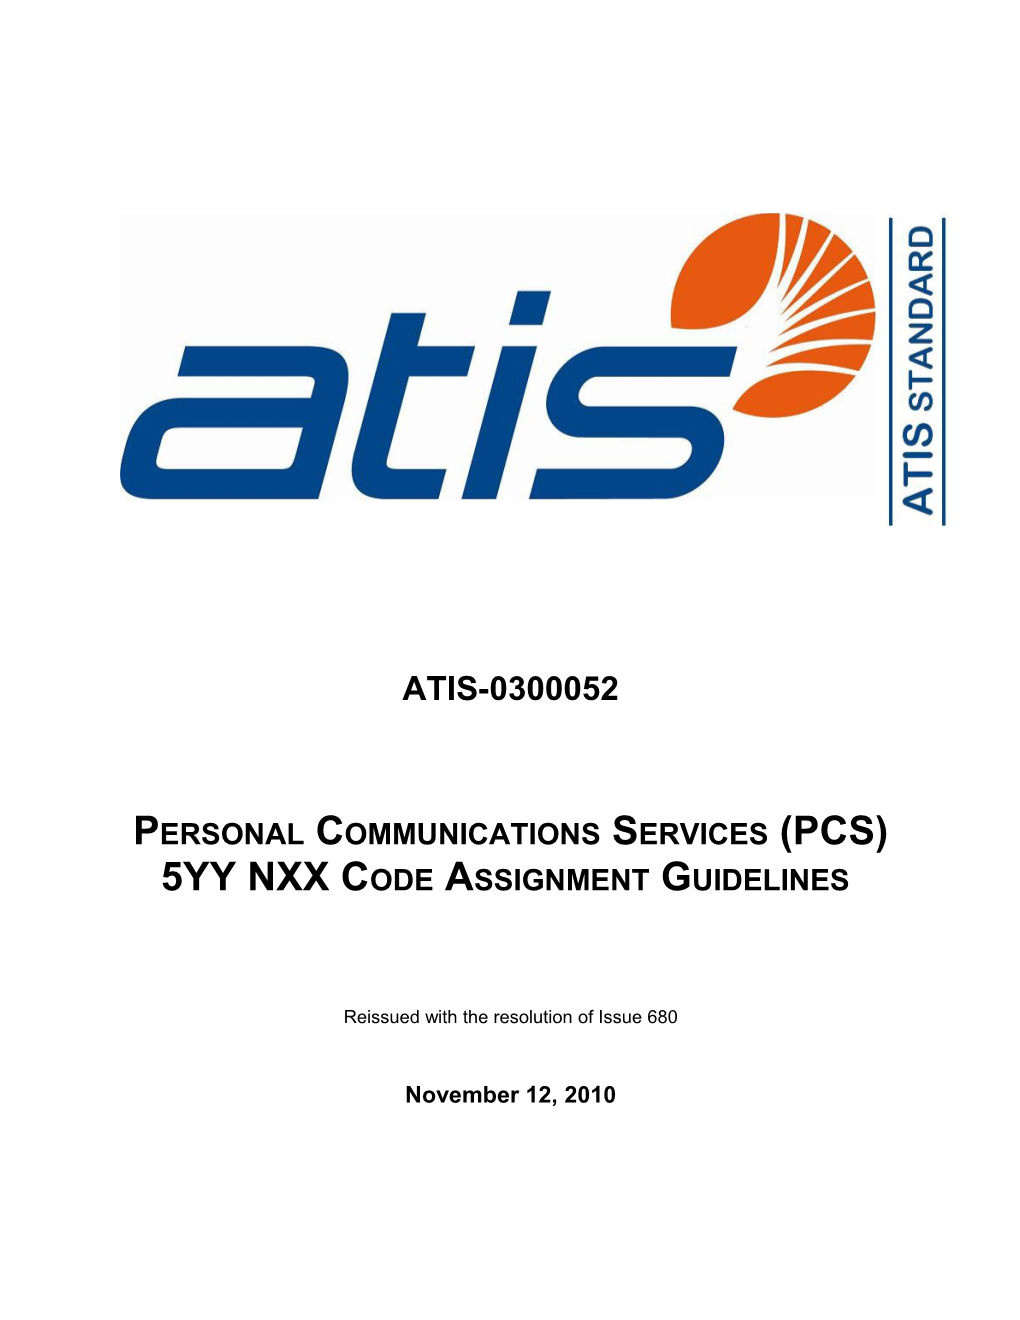 Personal Communications Services (Pcs)Atis-0300052